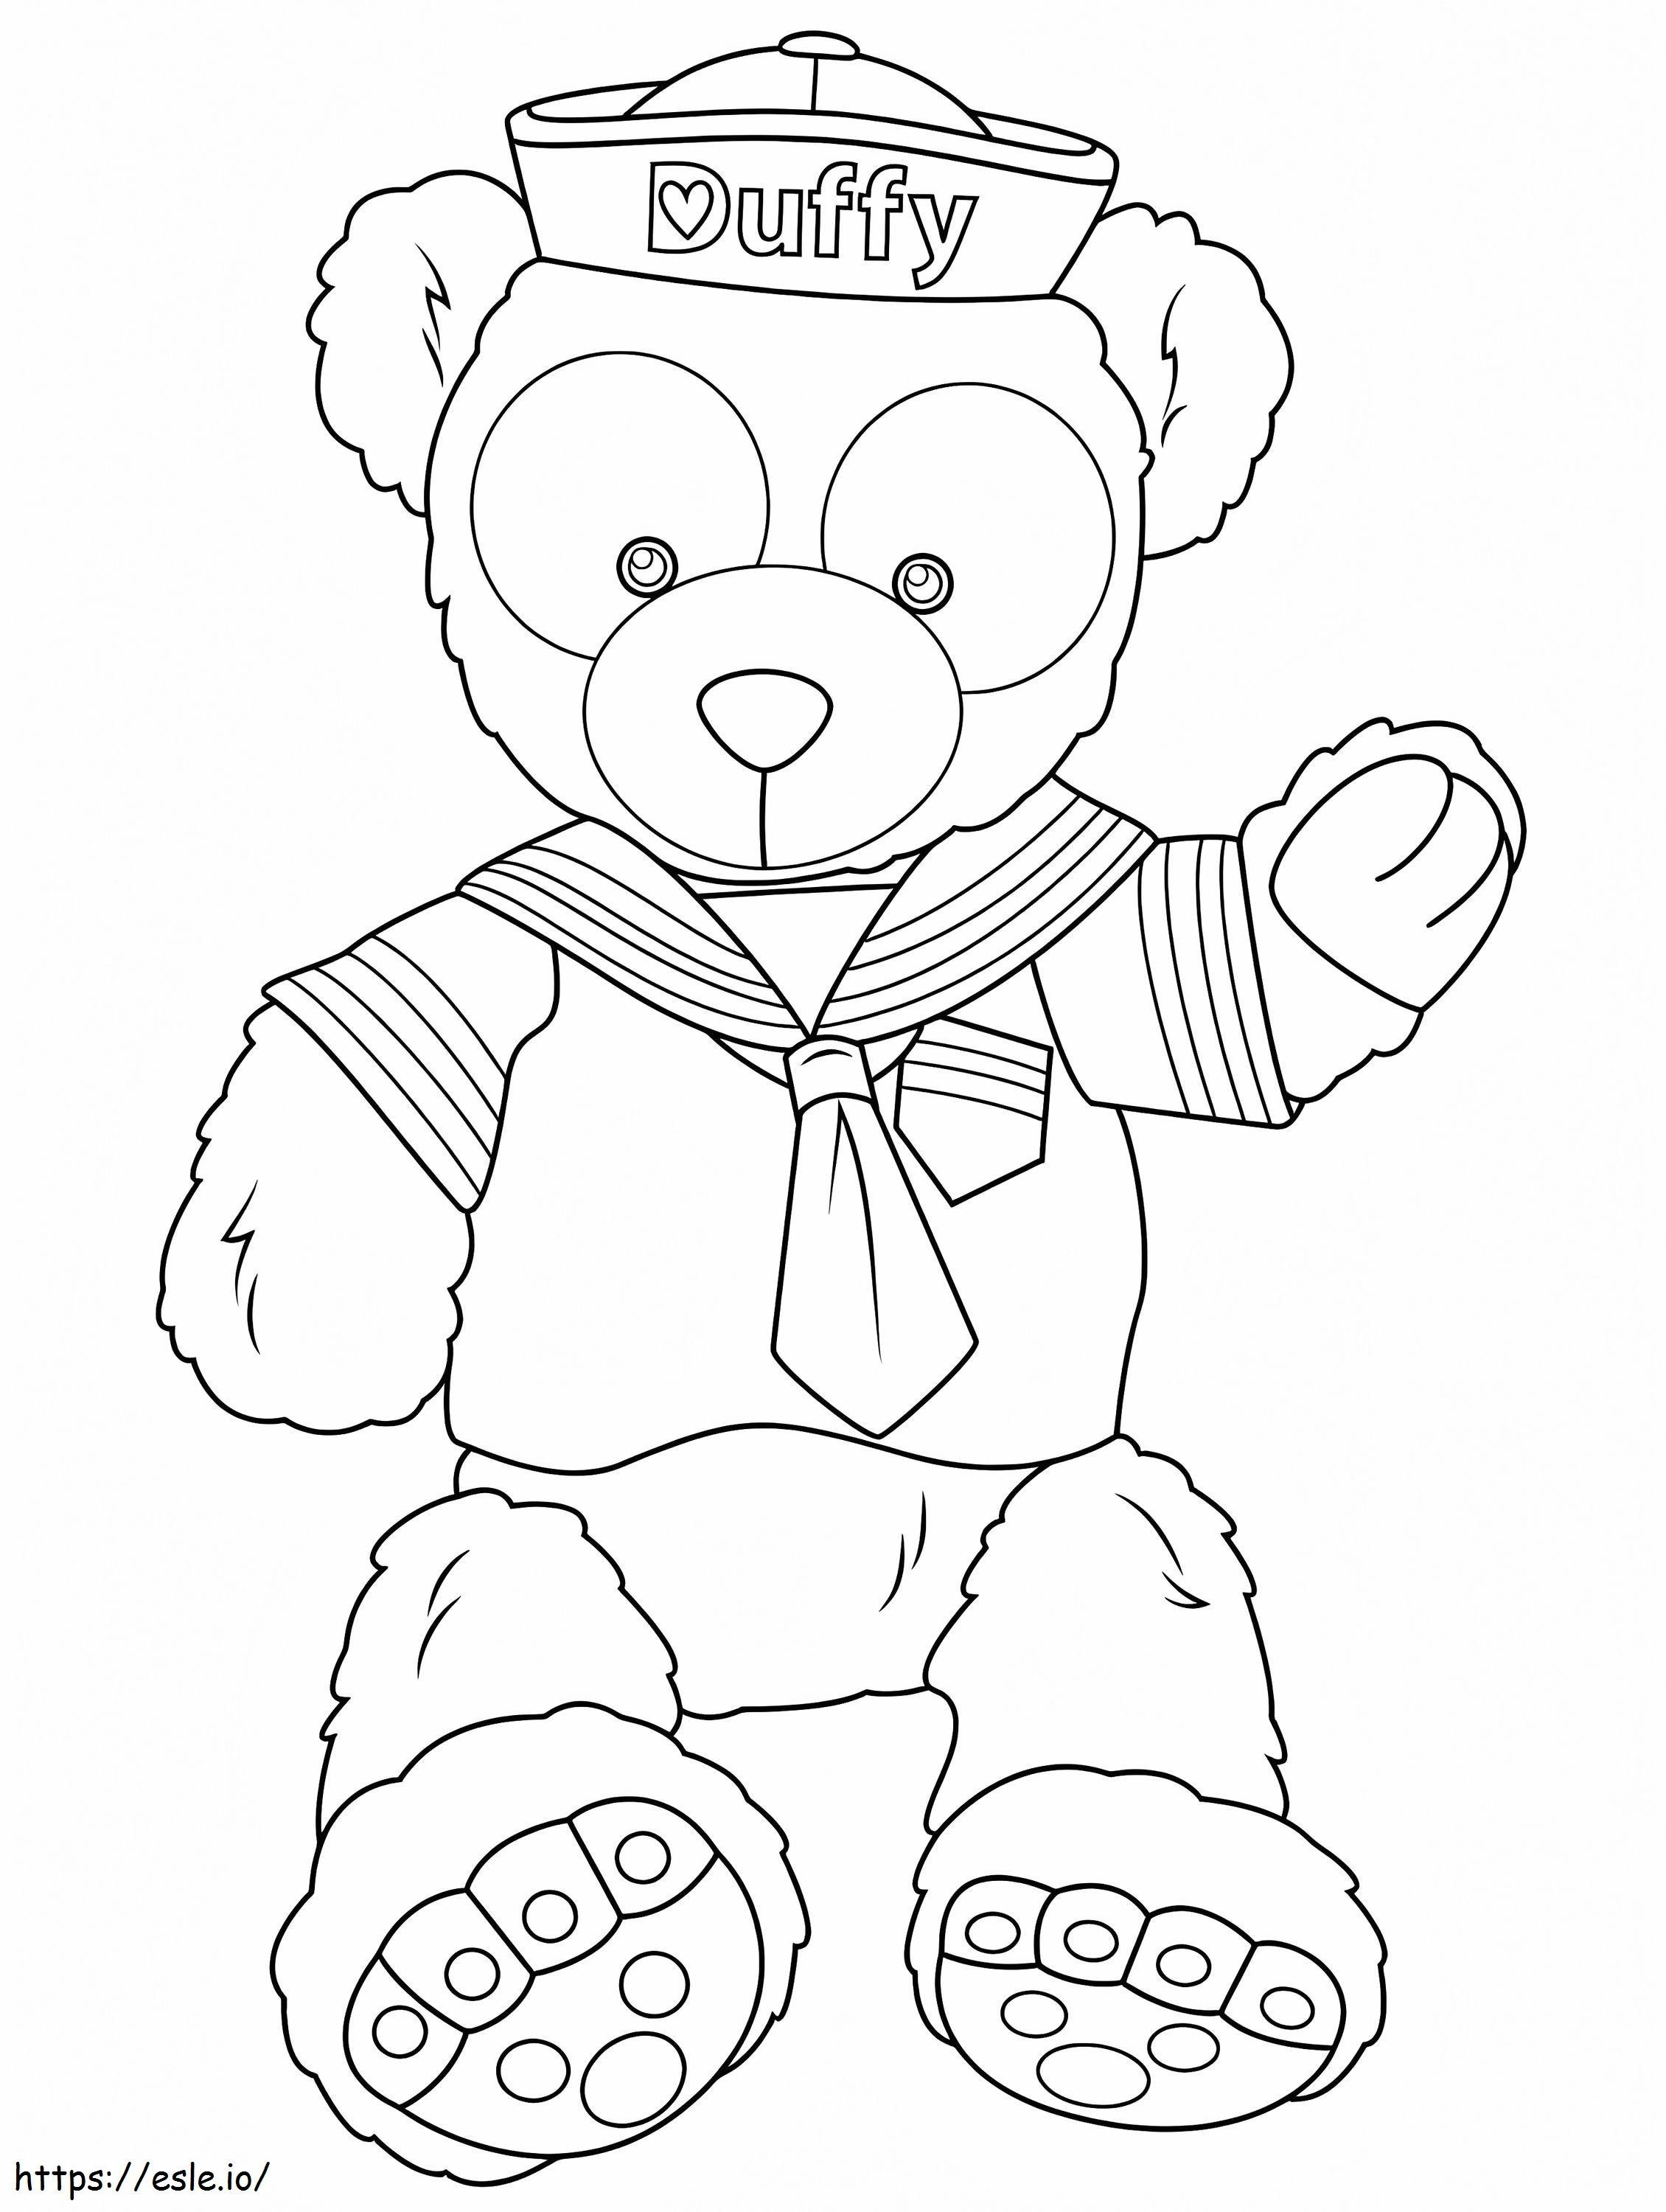 Matrosen-Teddybär ausmalbilder